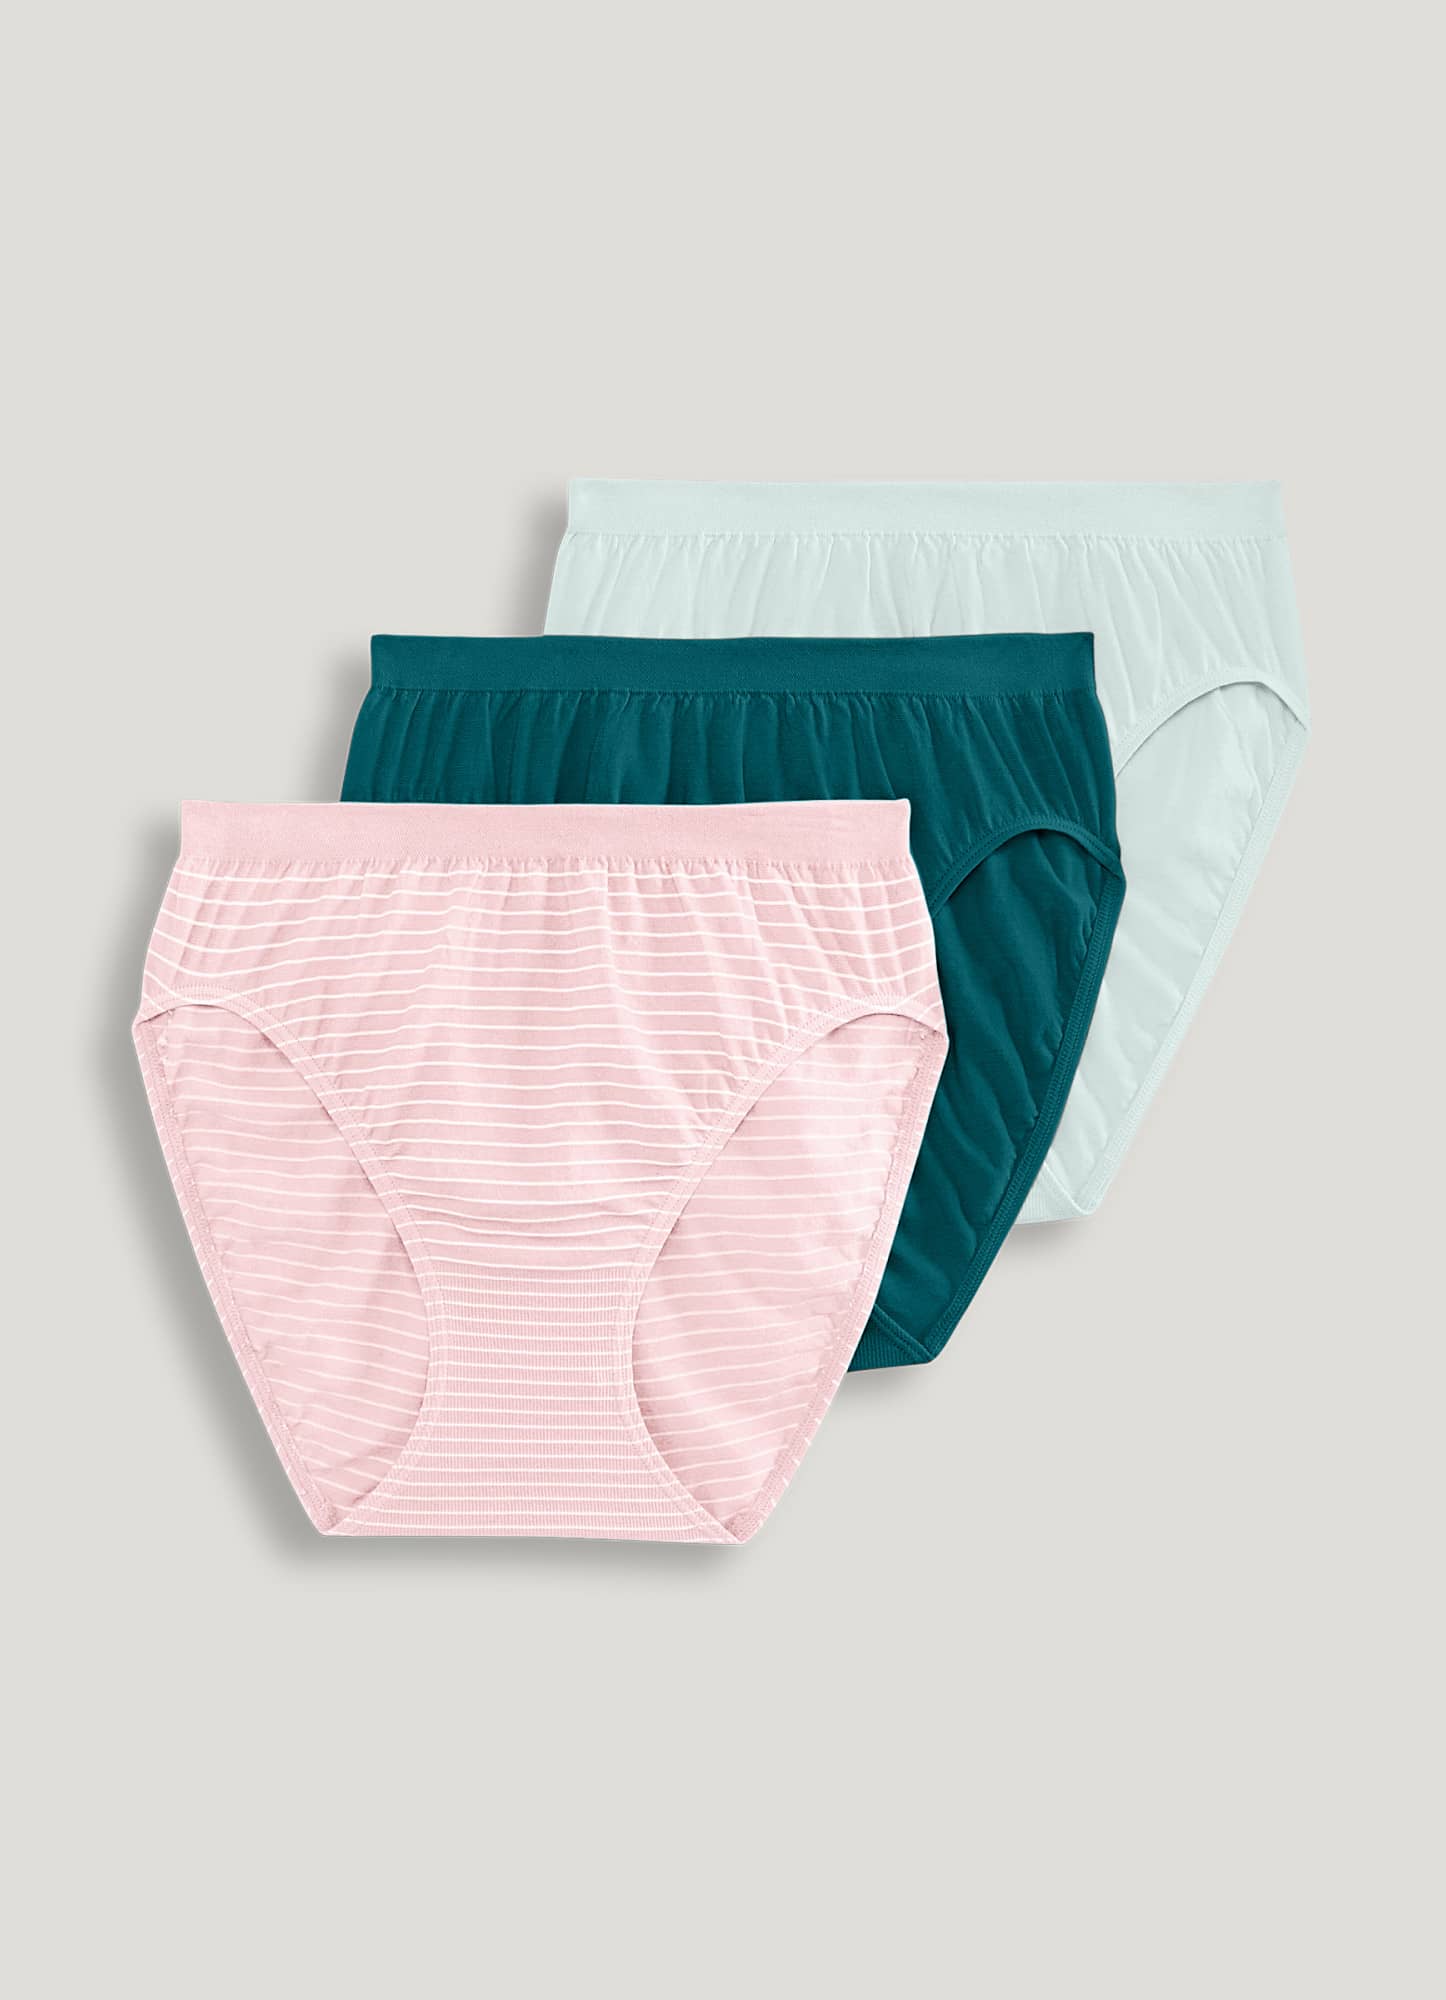 Jockey Women's Underwear Classic French Cut - 3 Pack, simple stripe, 7 :  Buy Online at Best Price in KSA - Souq is now : Fashion